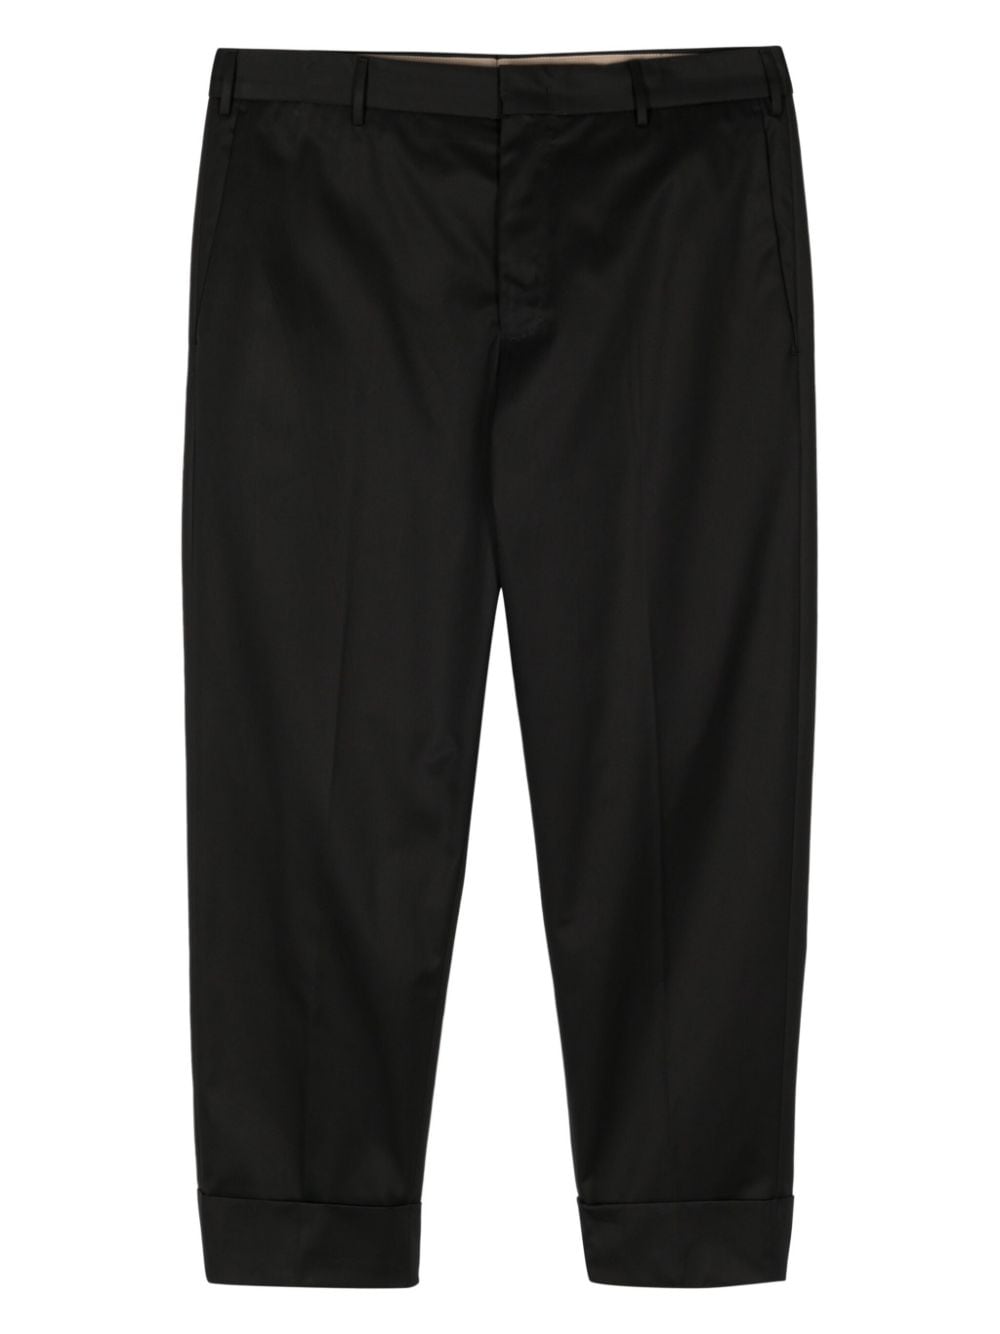 PT Torino Edge cotton chino trousers - Black von PT Torino